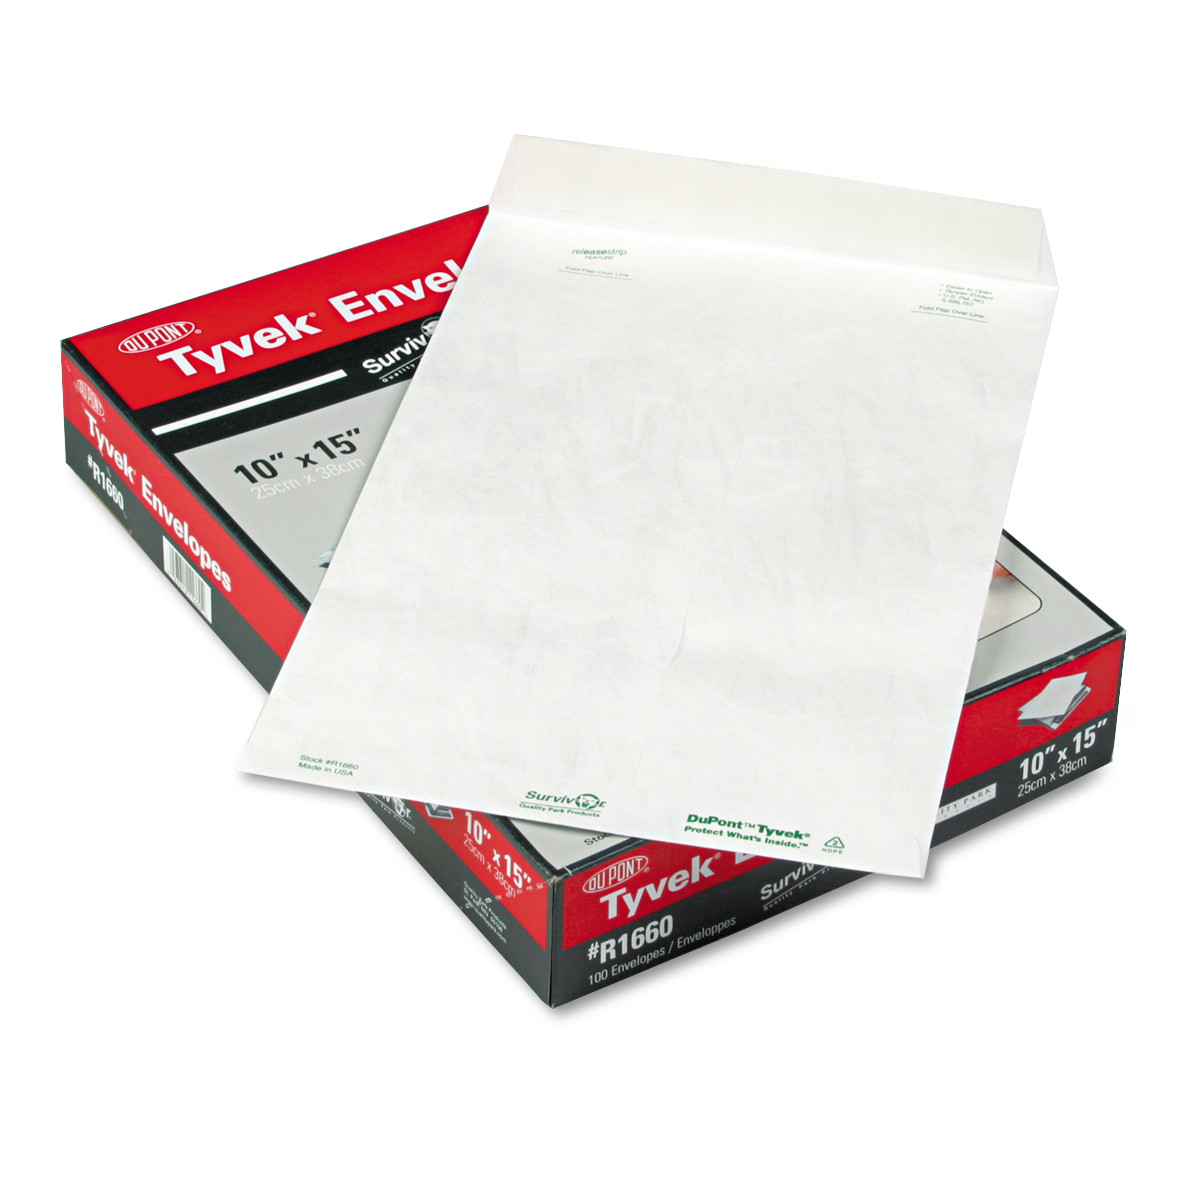 Quality Park Flap-Stik Open-end Envelopes - Catalog - 10" Width x 15" Length - 14 lb - Peel & Seal - Tyvek - 100 / Box - White